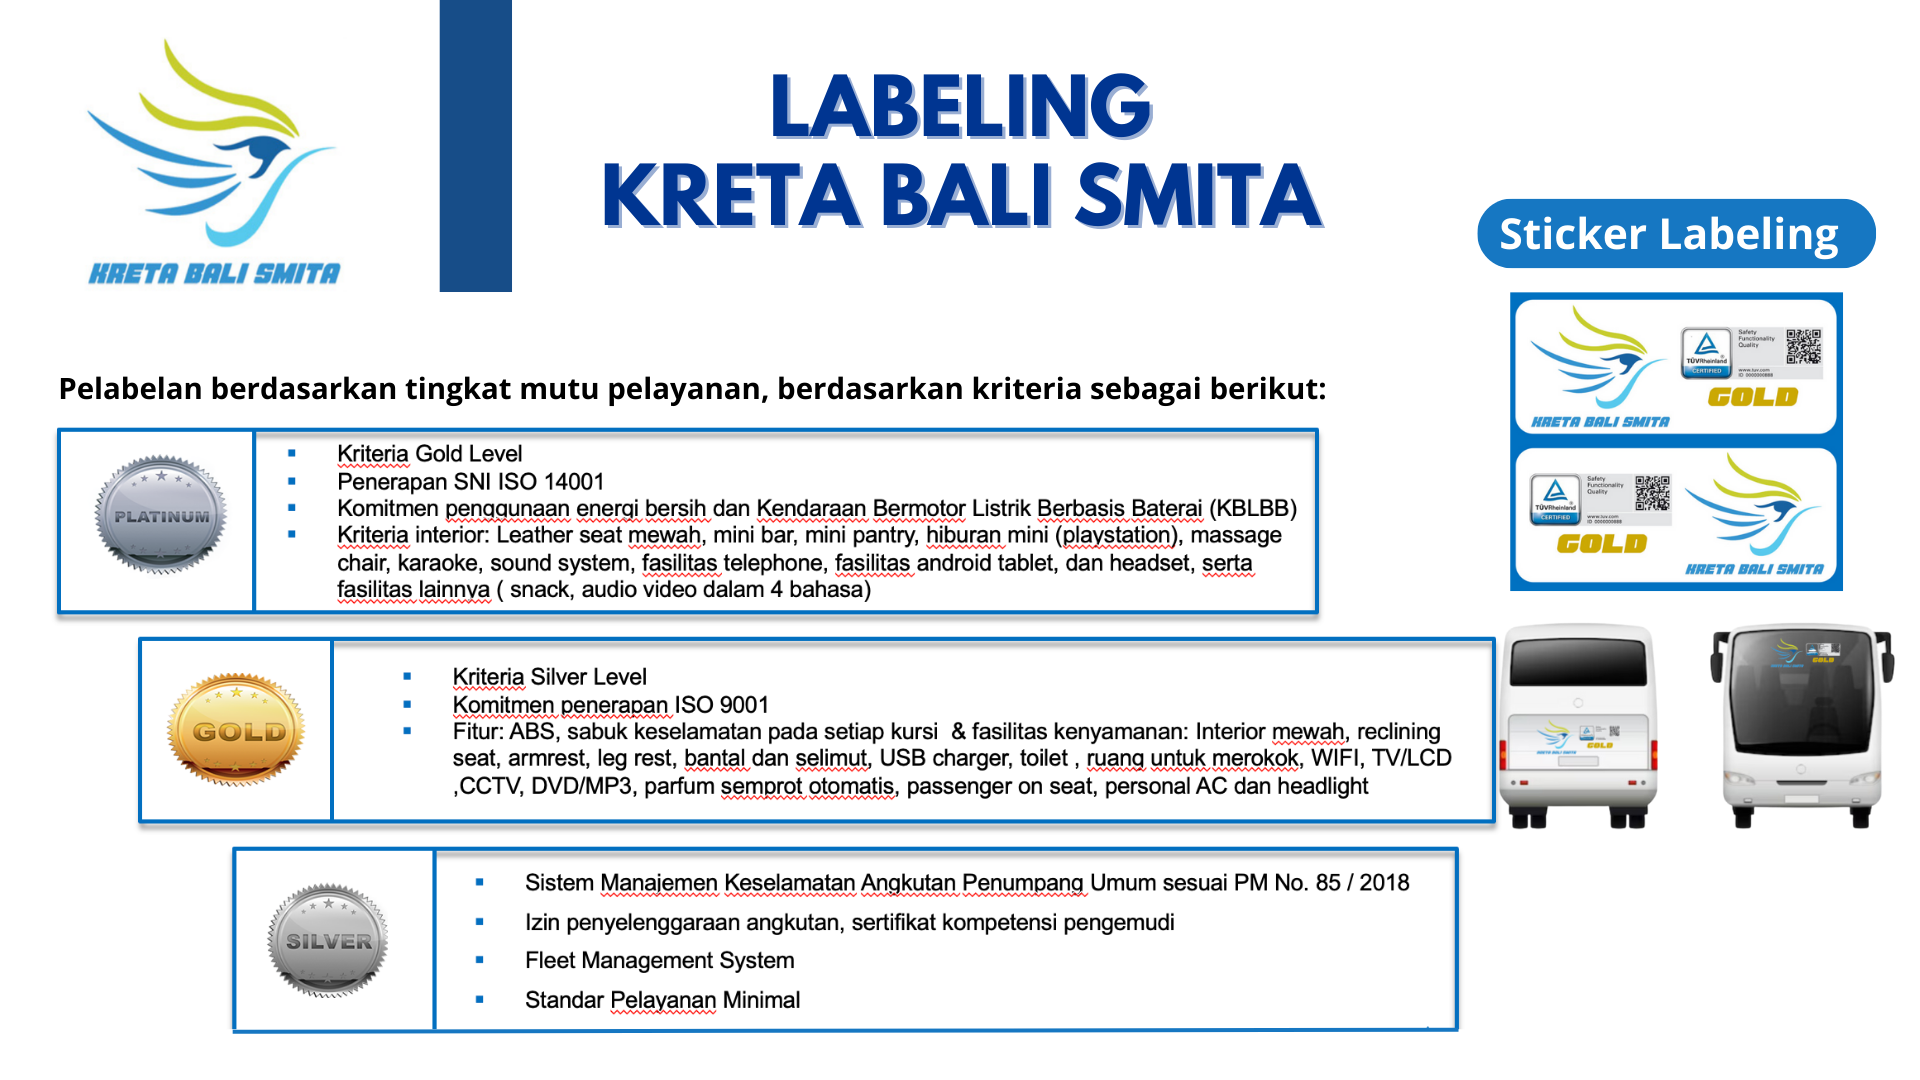 Labeling Kreta Bali Smita